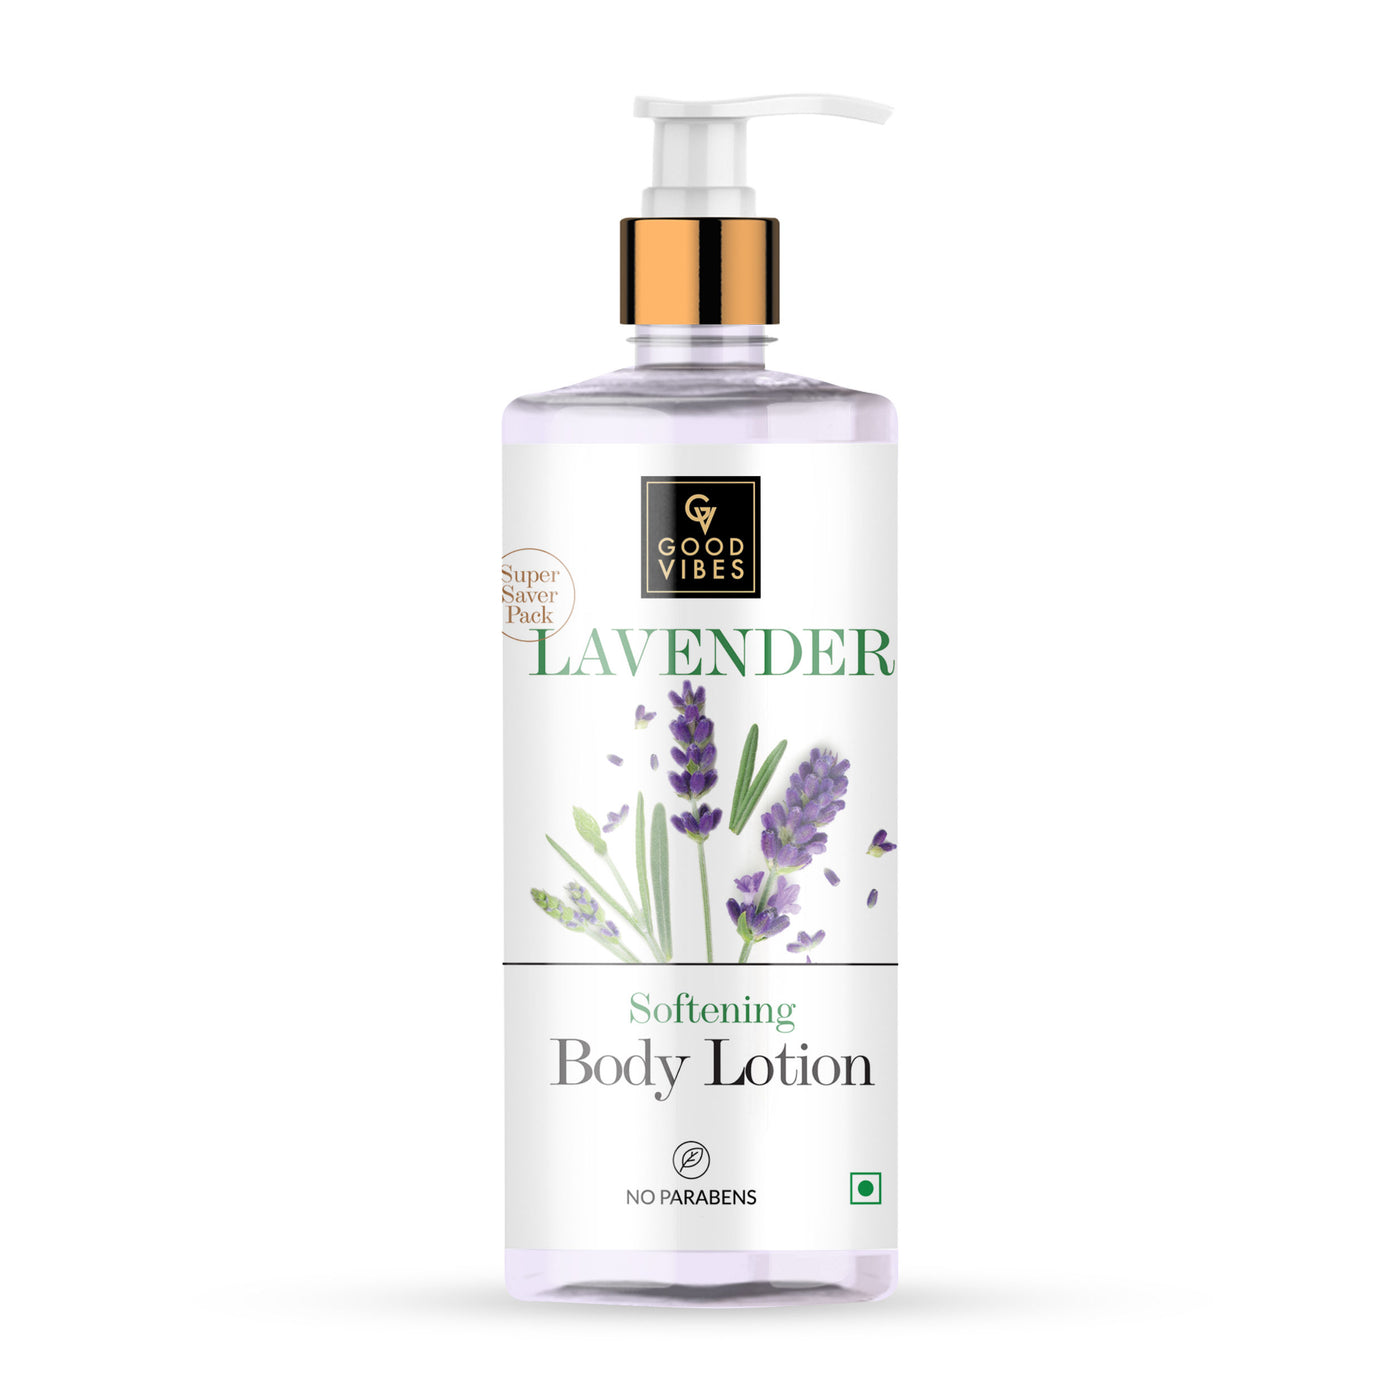 good-vibes-lavender-softening-body-lotion-400ml-100-ml-free-1-16-7